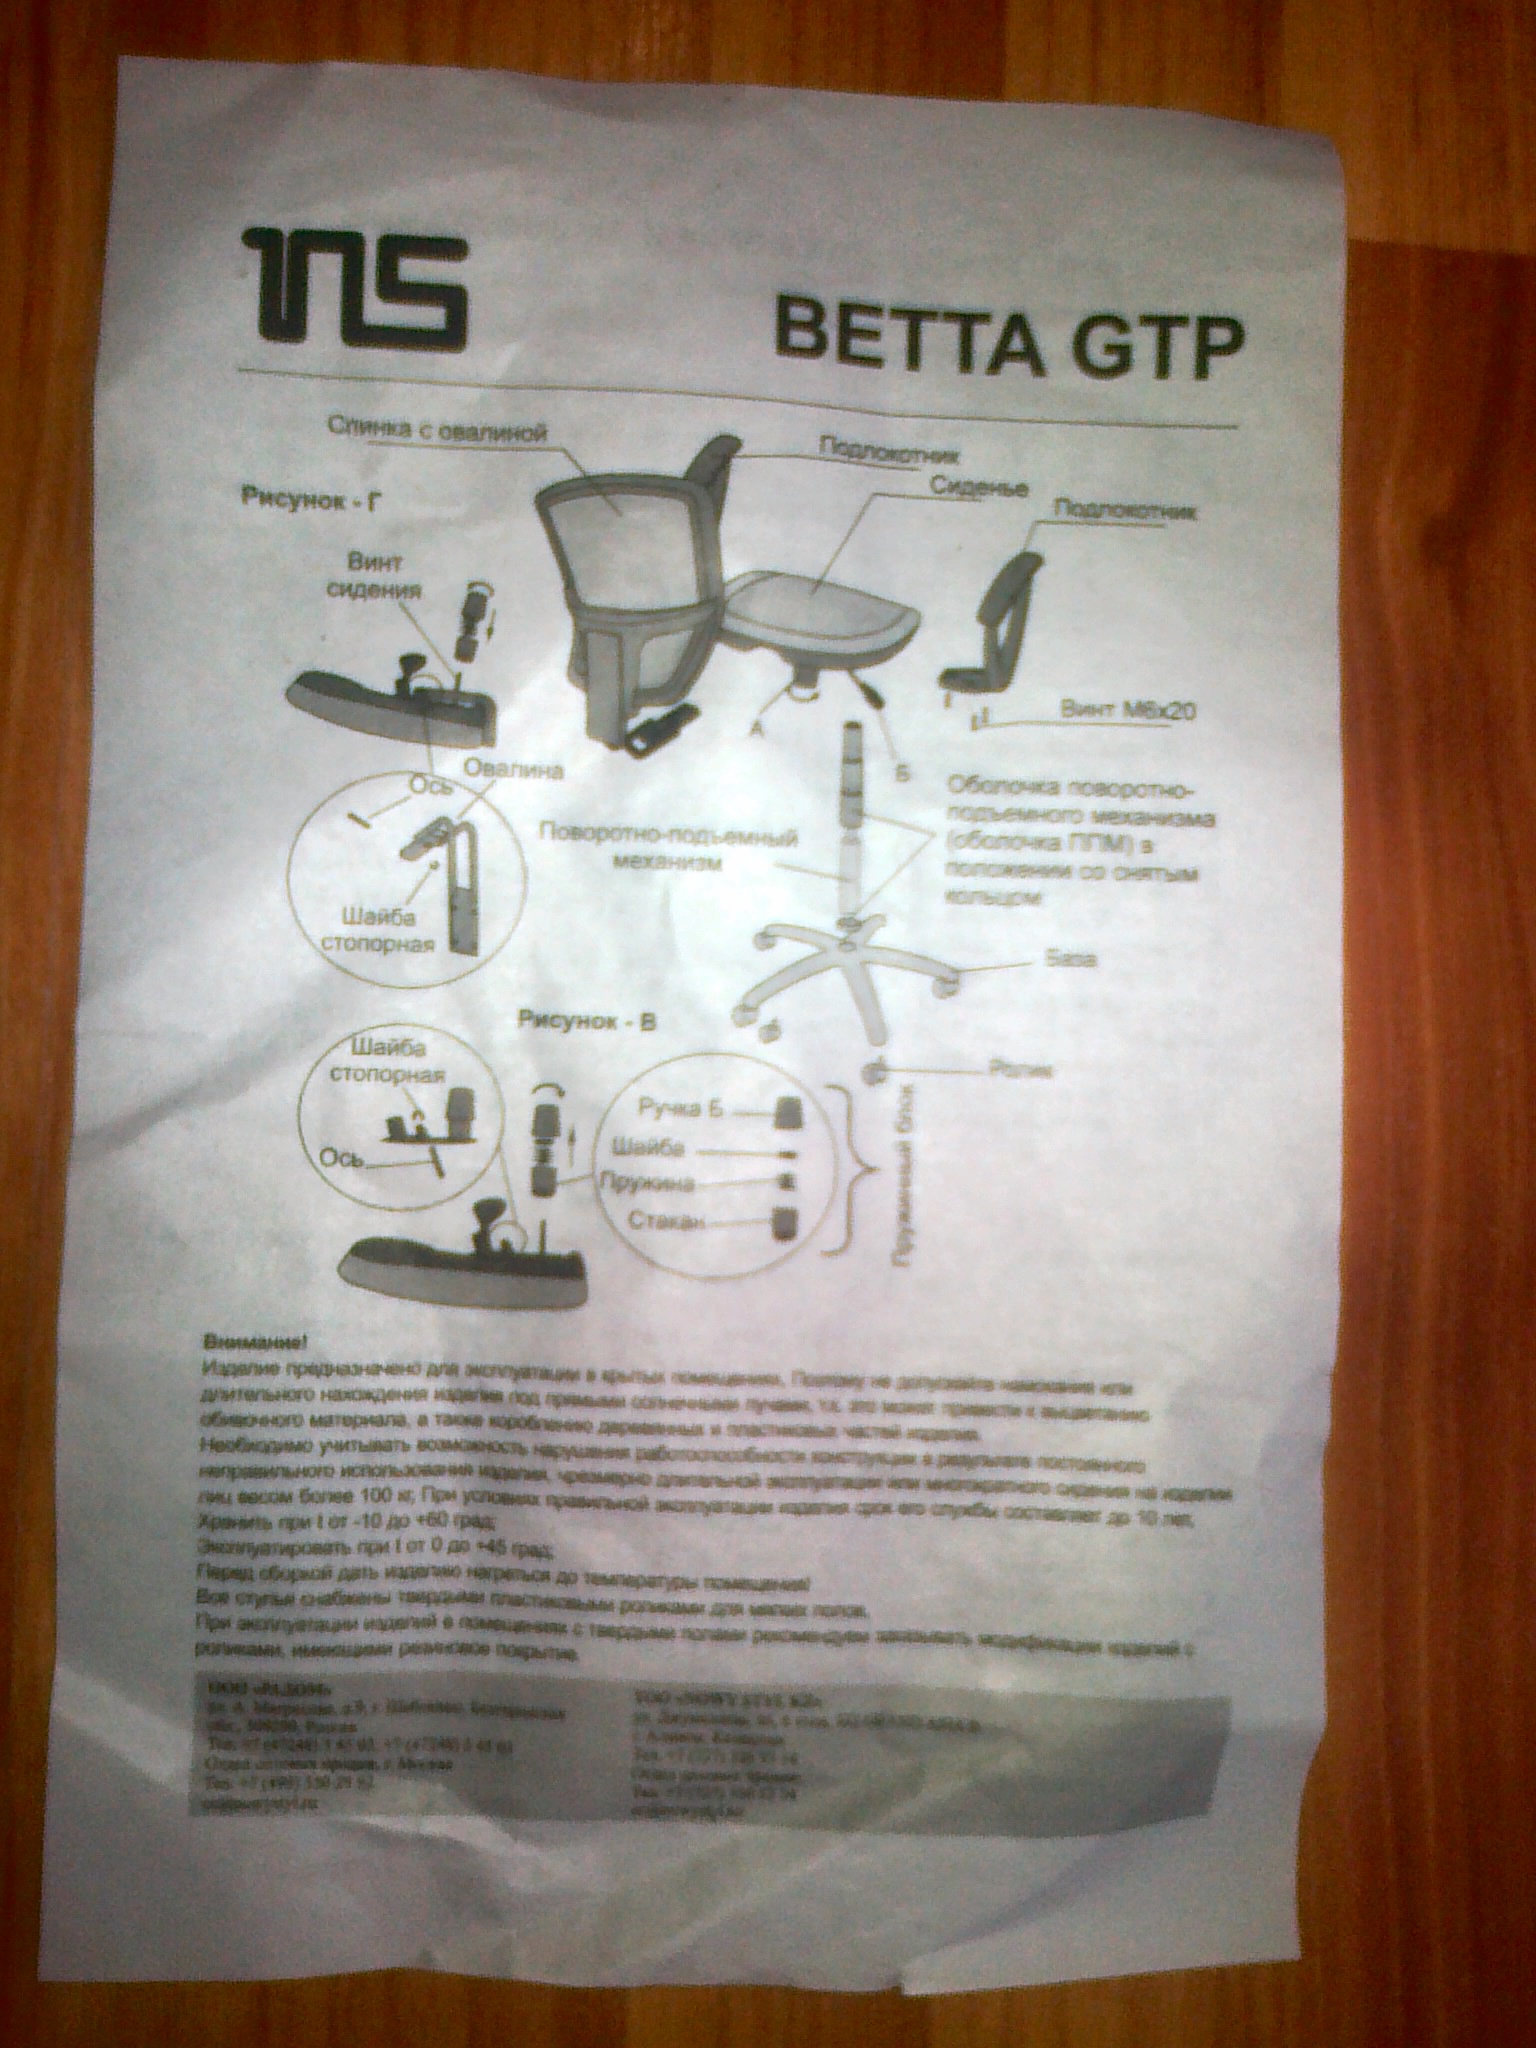 Betta GTP ru Oh/5